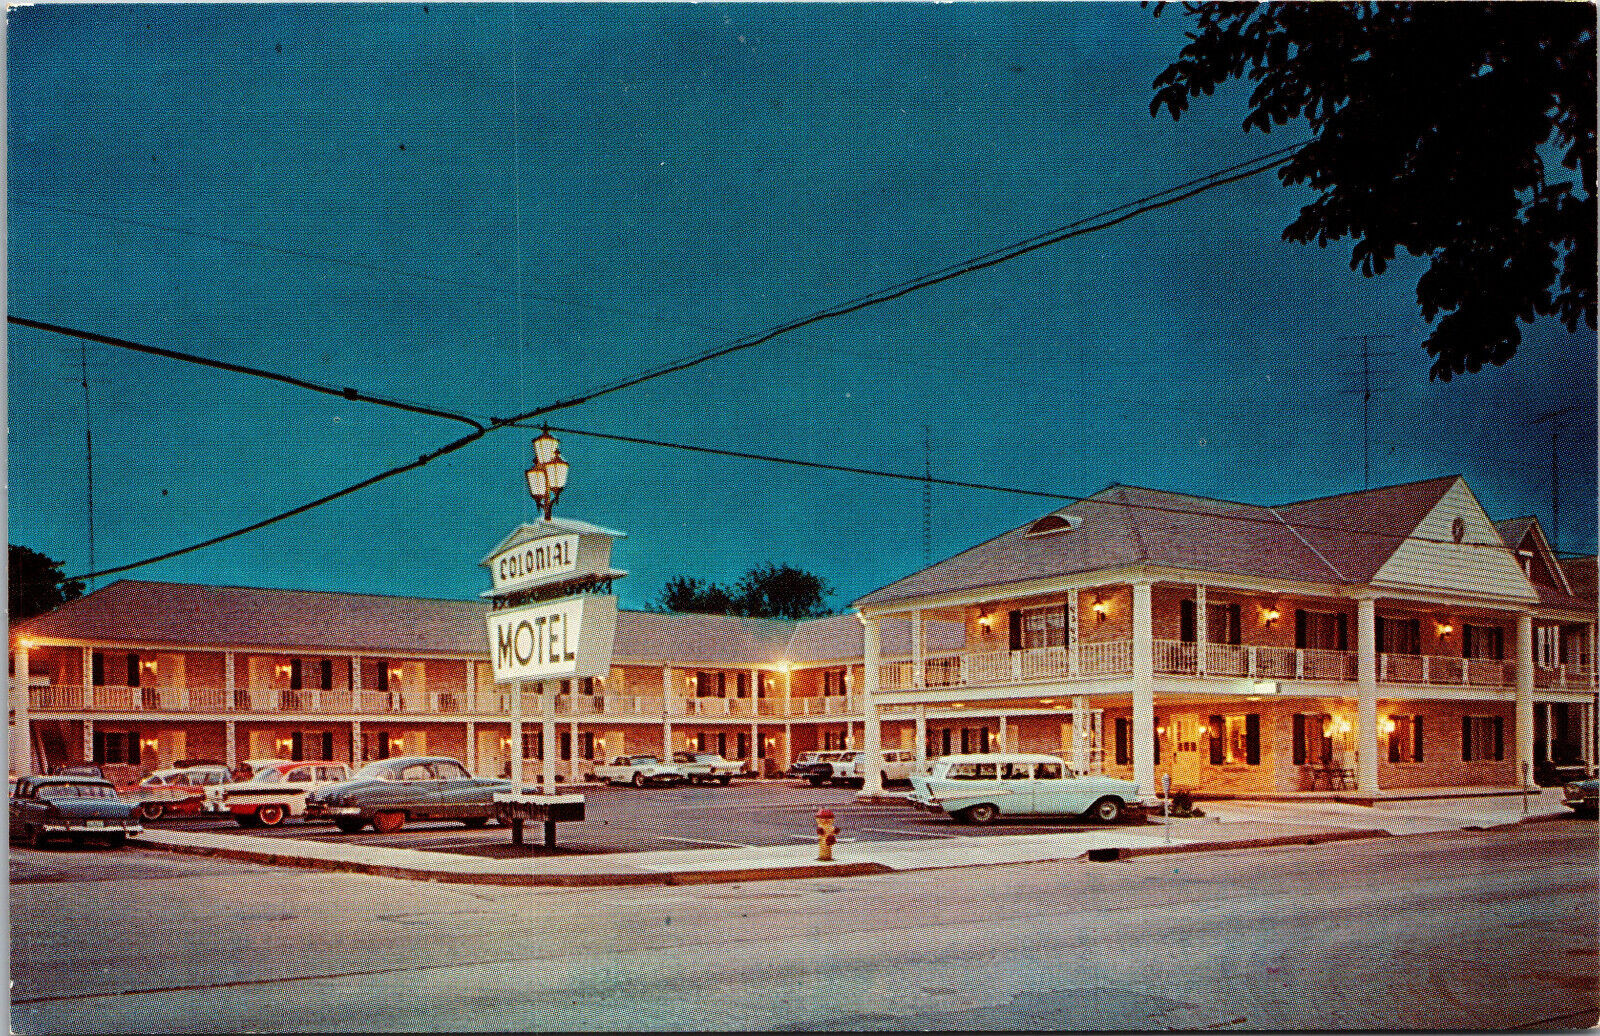 Colonial Motel Gettysburg Pennsylvania Vintage Hotel Postcard